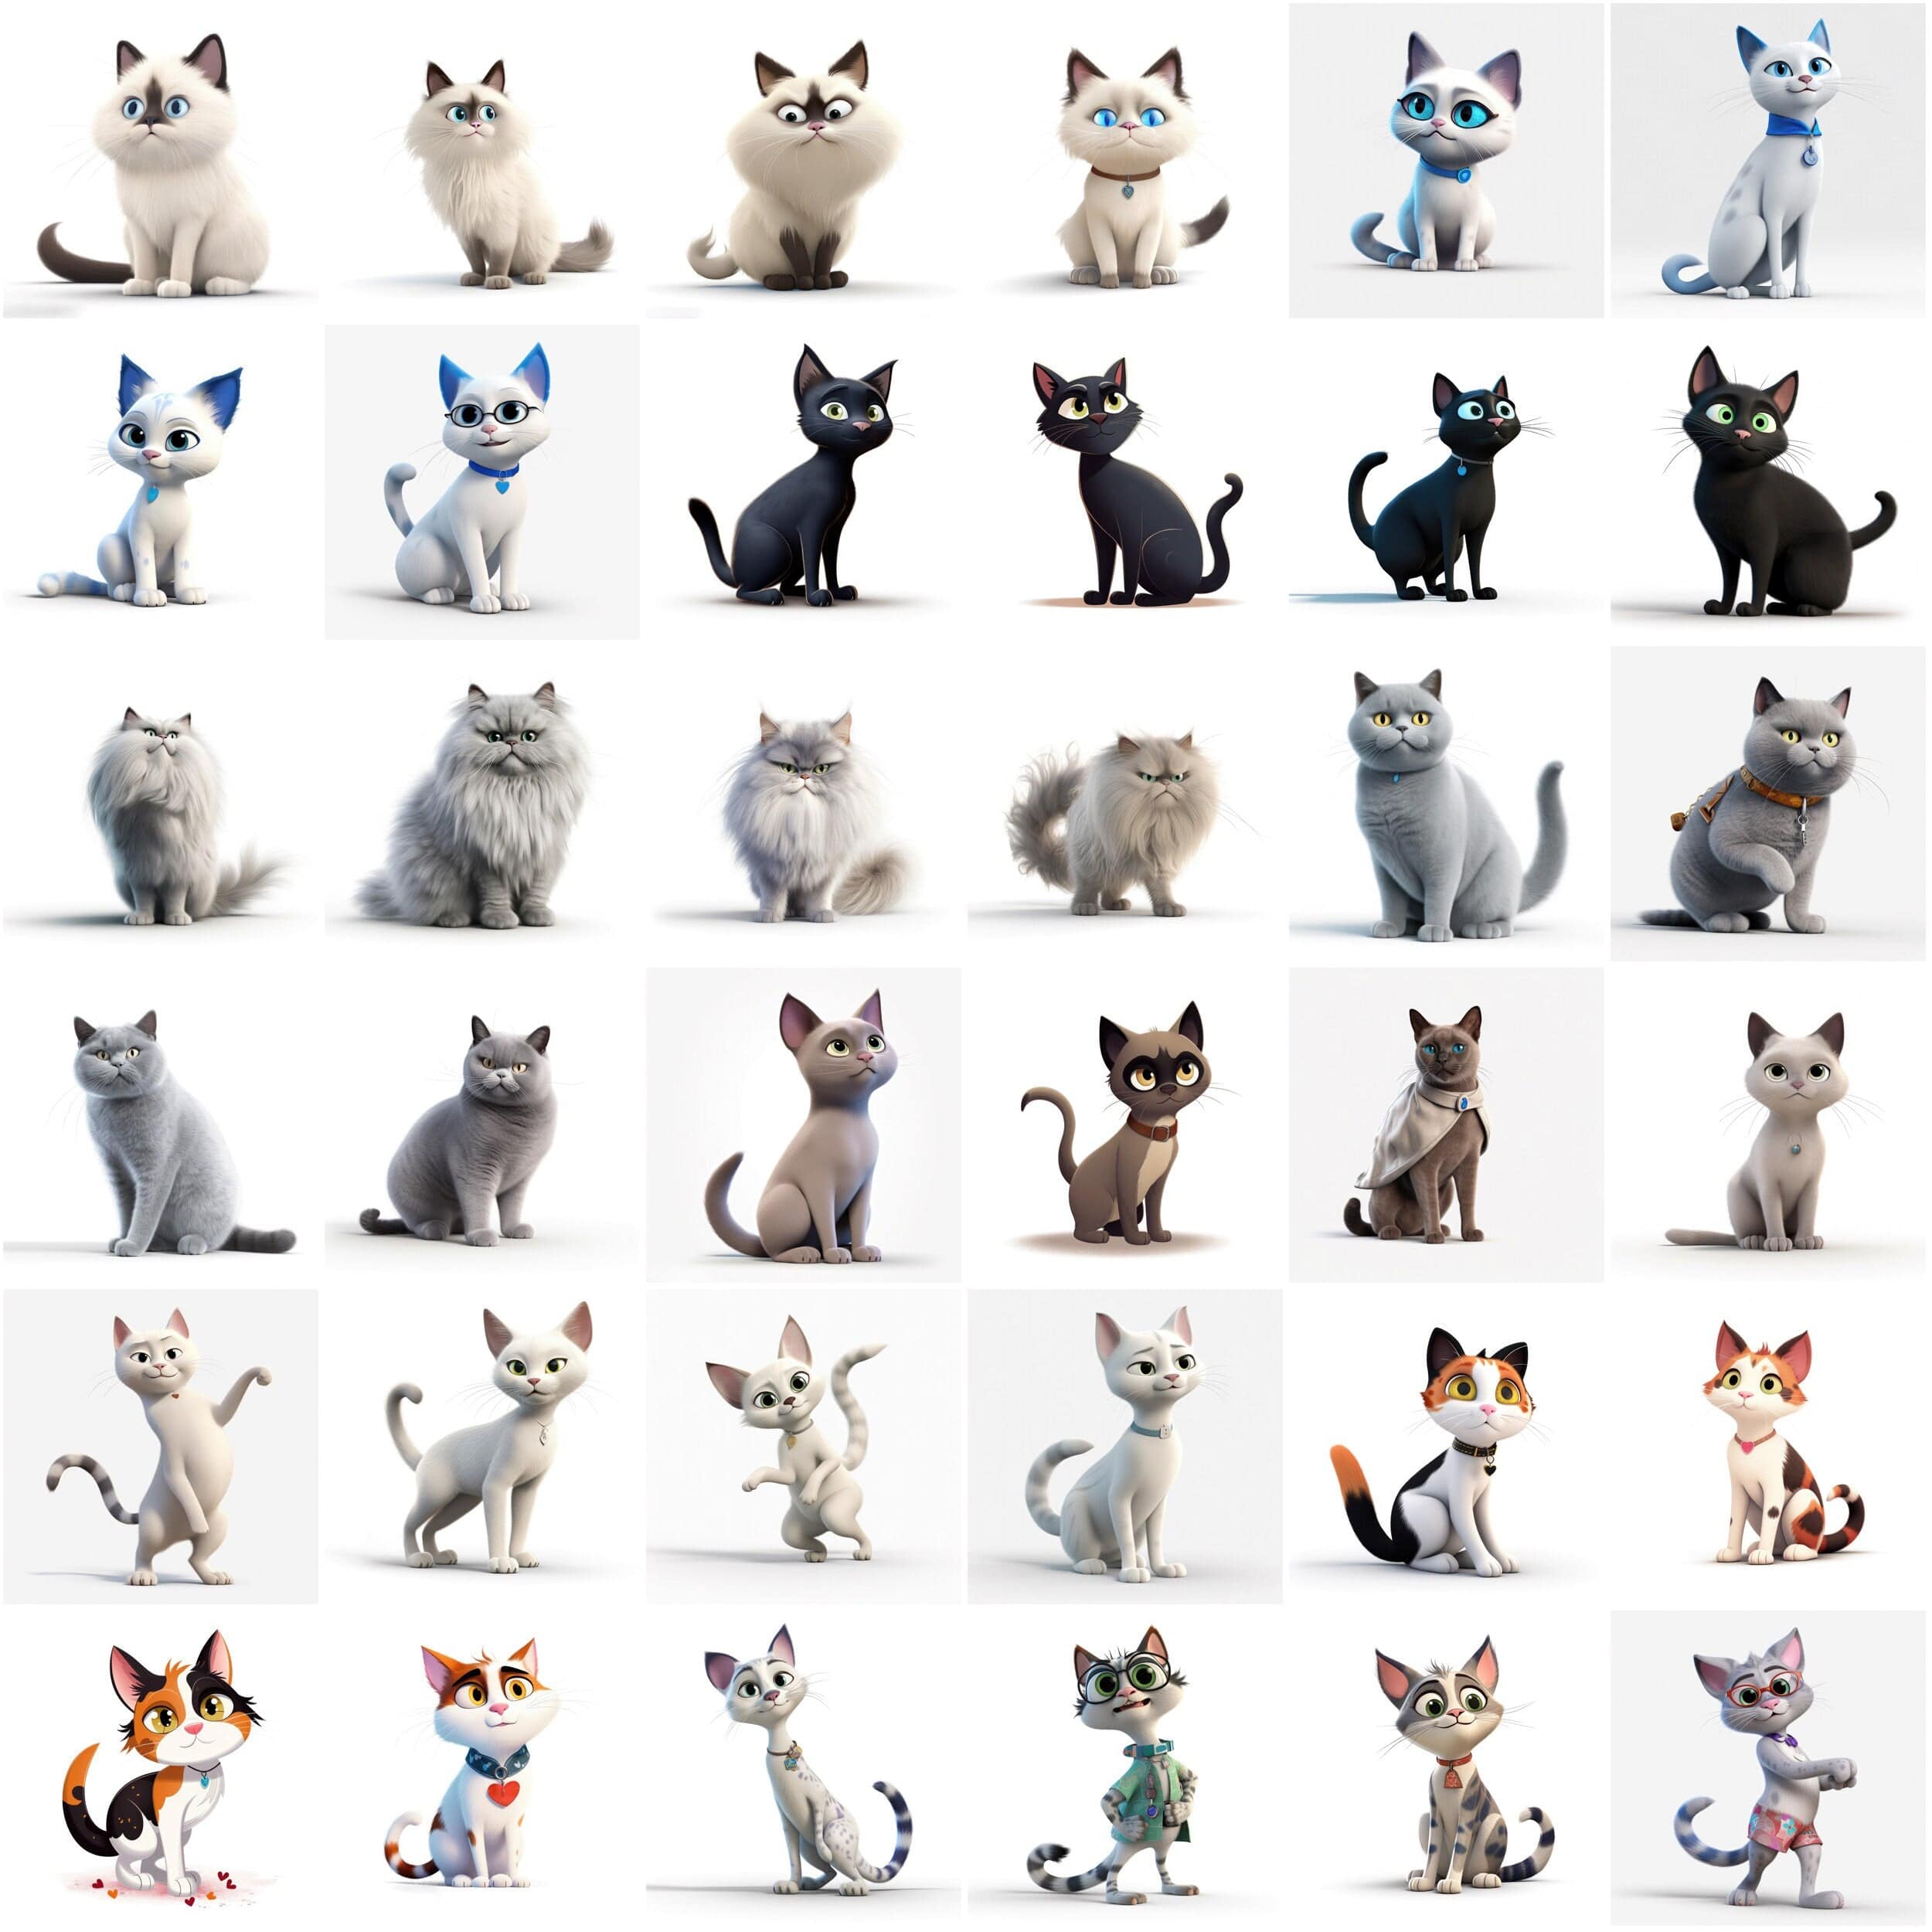 3D & Cartoon Cat Image Bundle - 370 Transparent PNG Cat Graphics for Creative Projects - Ultimate Cat Lovers' 3D Cartoon Image Collection Digital Download Sumobundle